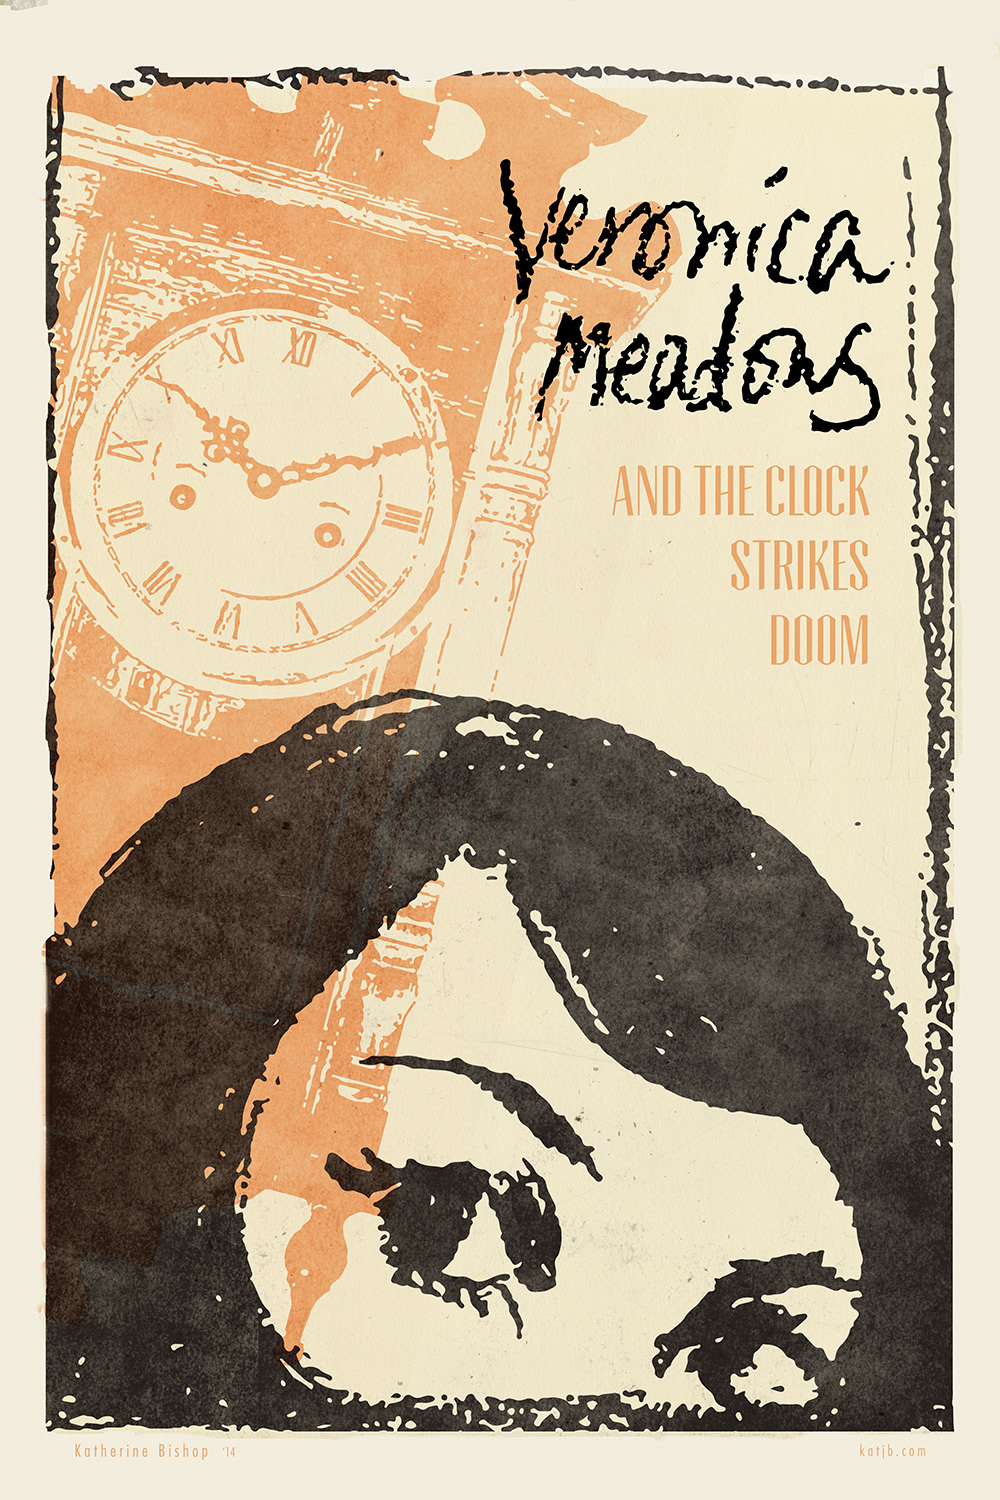 veronica meadows book cover detective book Mystery novel girl detective trinity rep